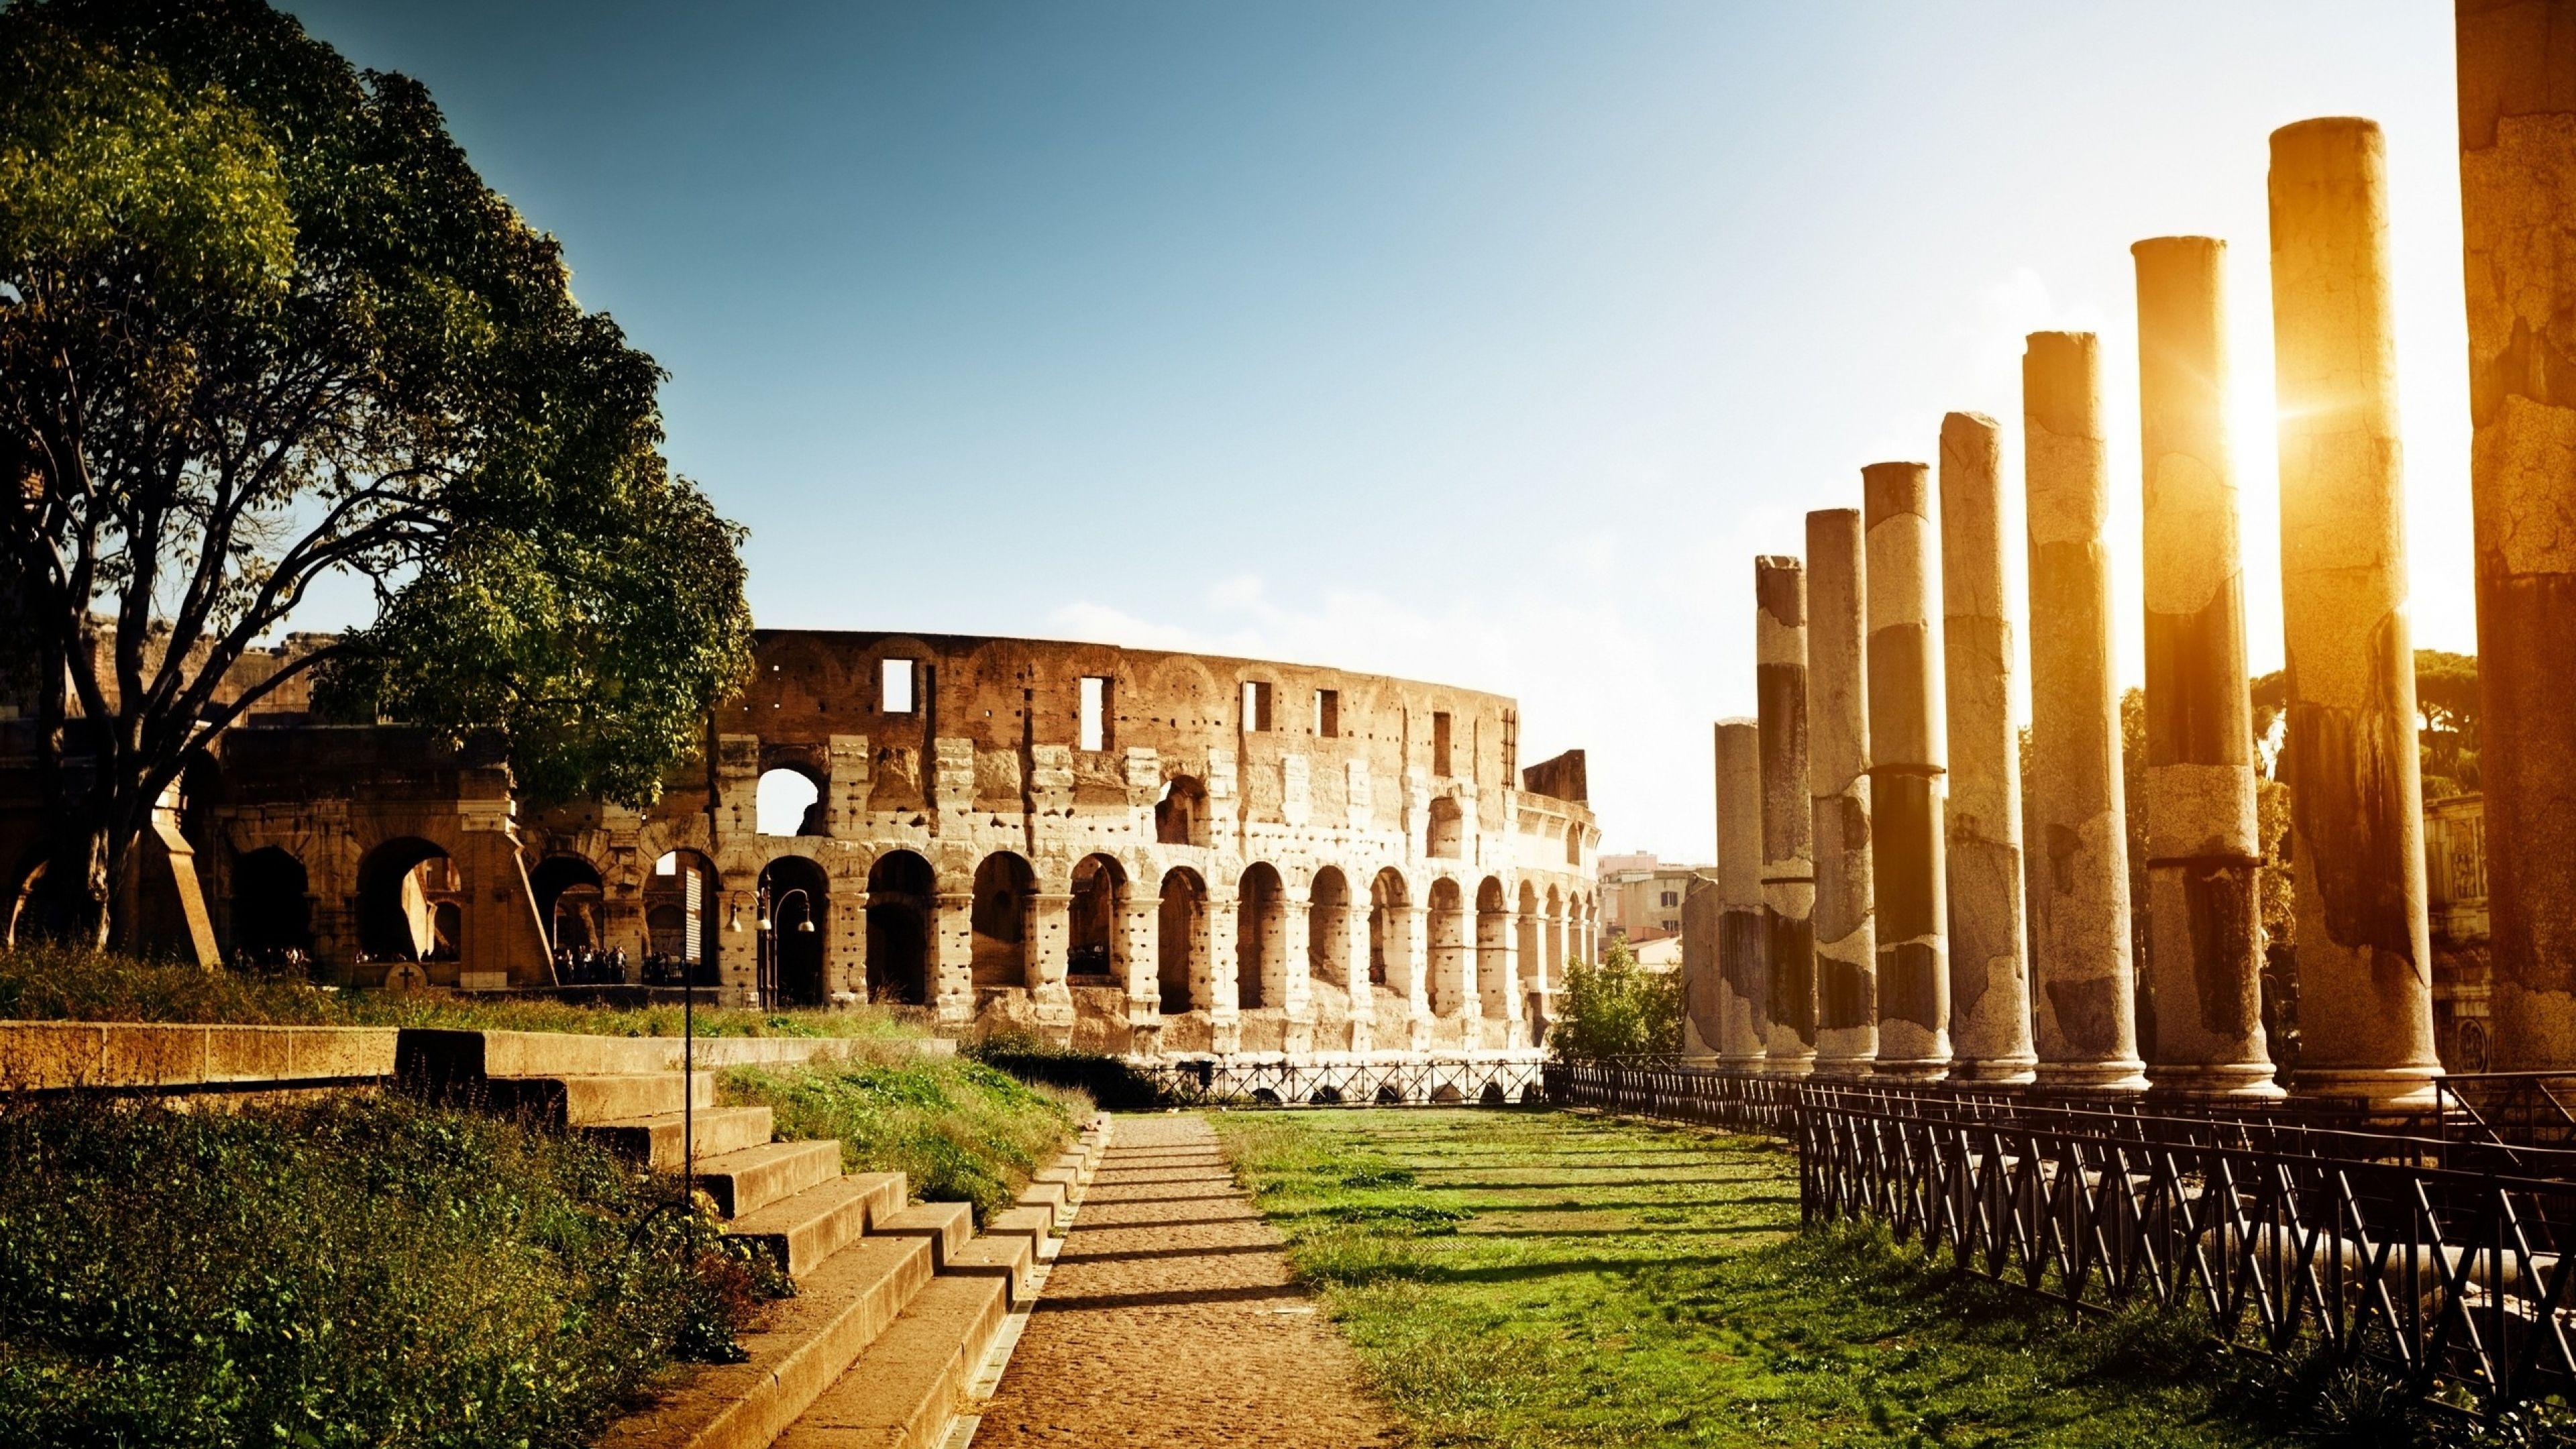 Colosseum Rome wallpapers, Stunning backgrounds, Architectural wonder, Historical treasure, 3840x2160 4K Desktop